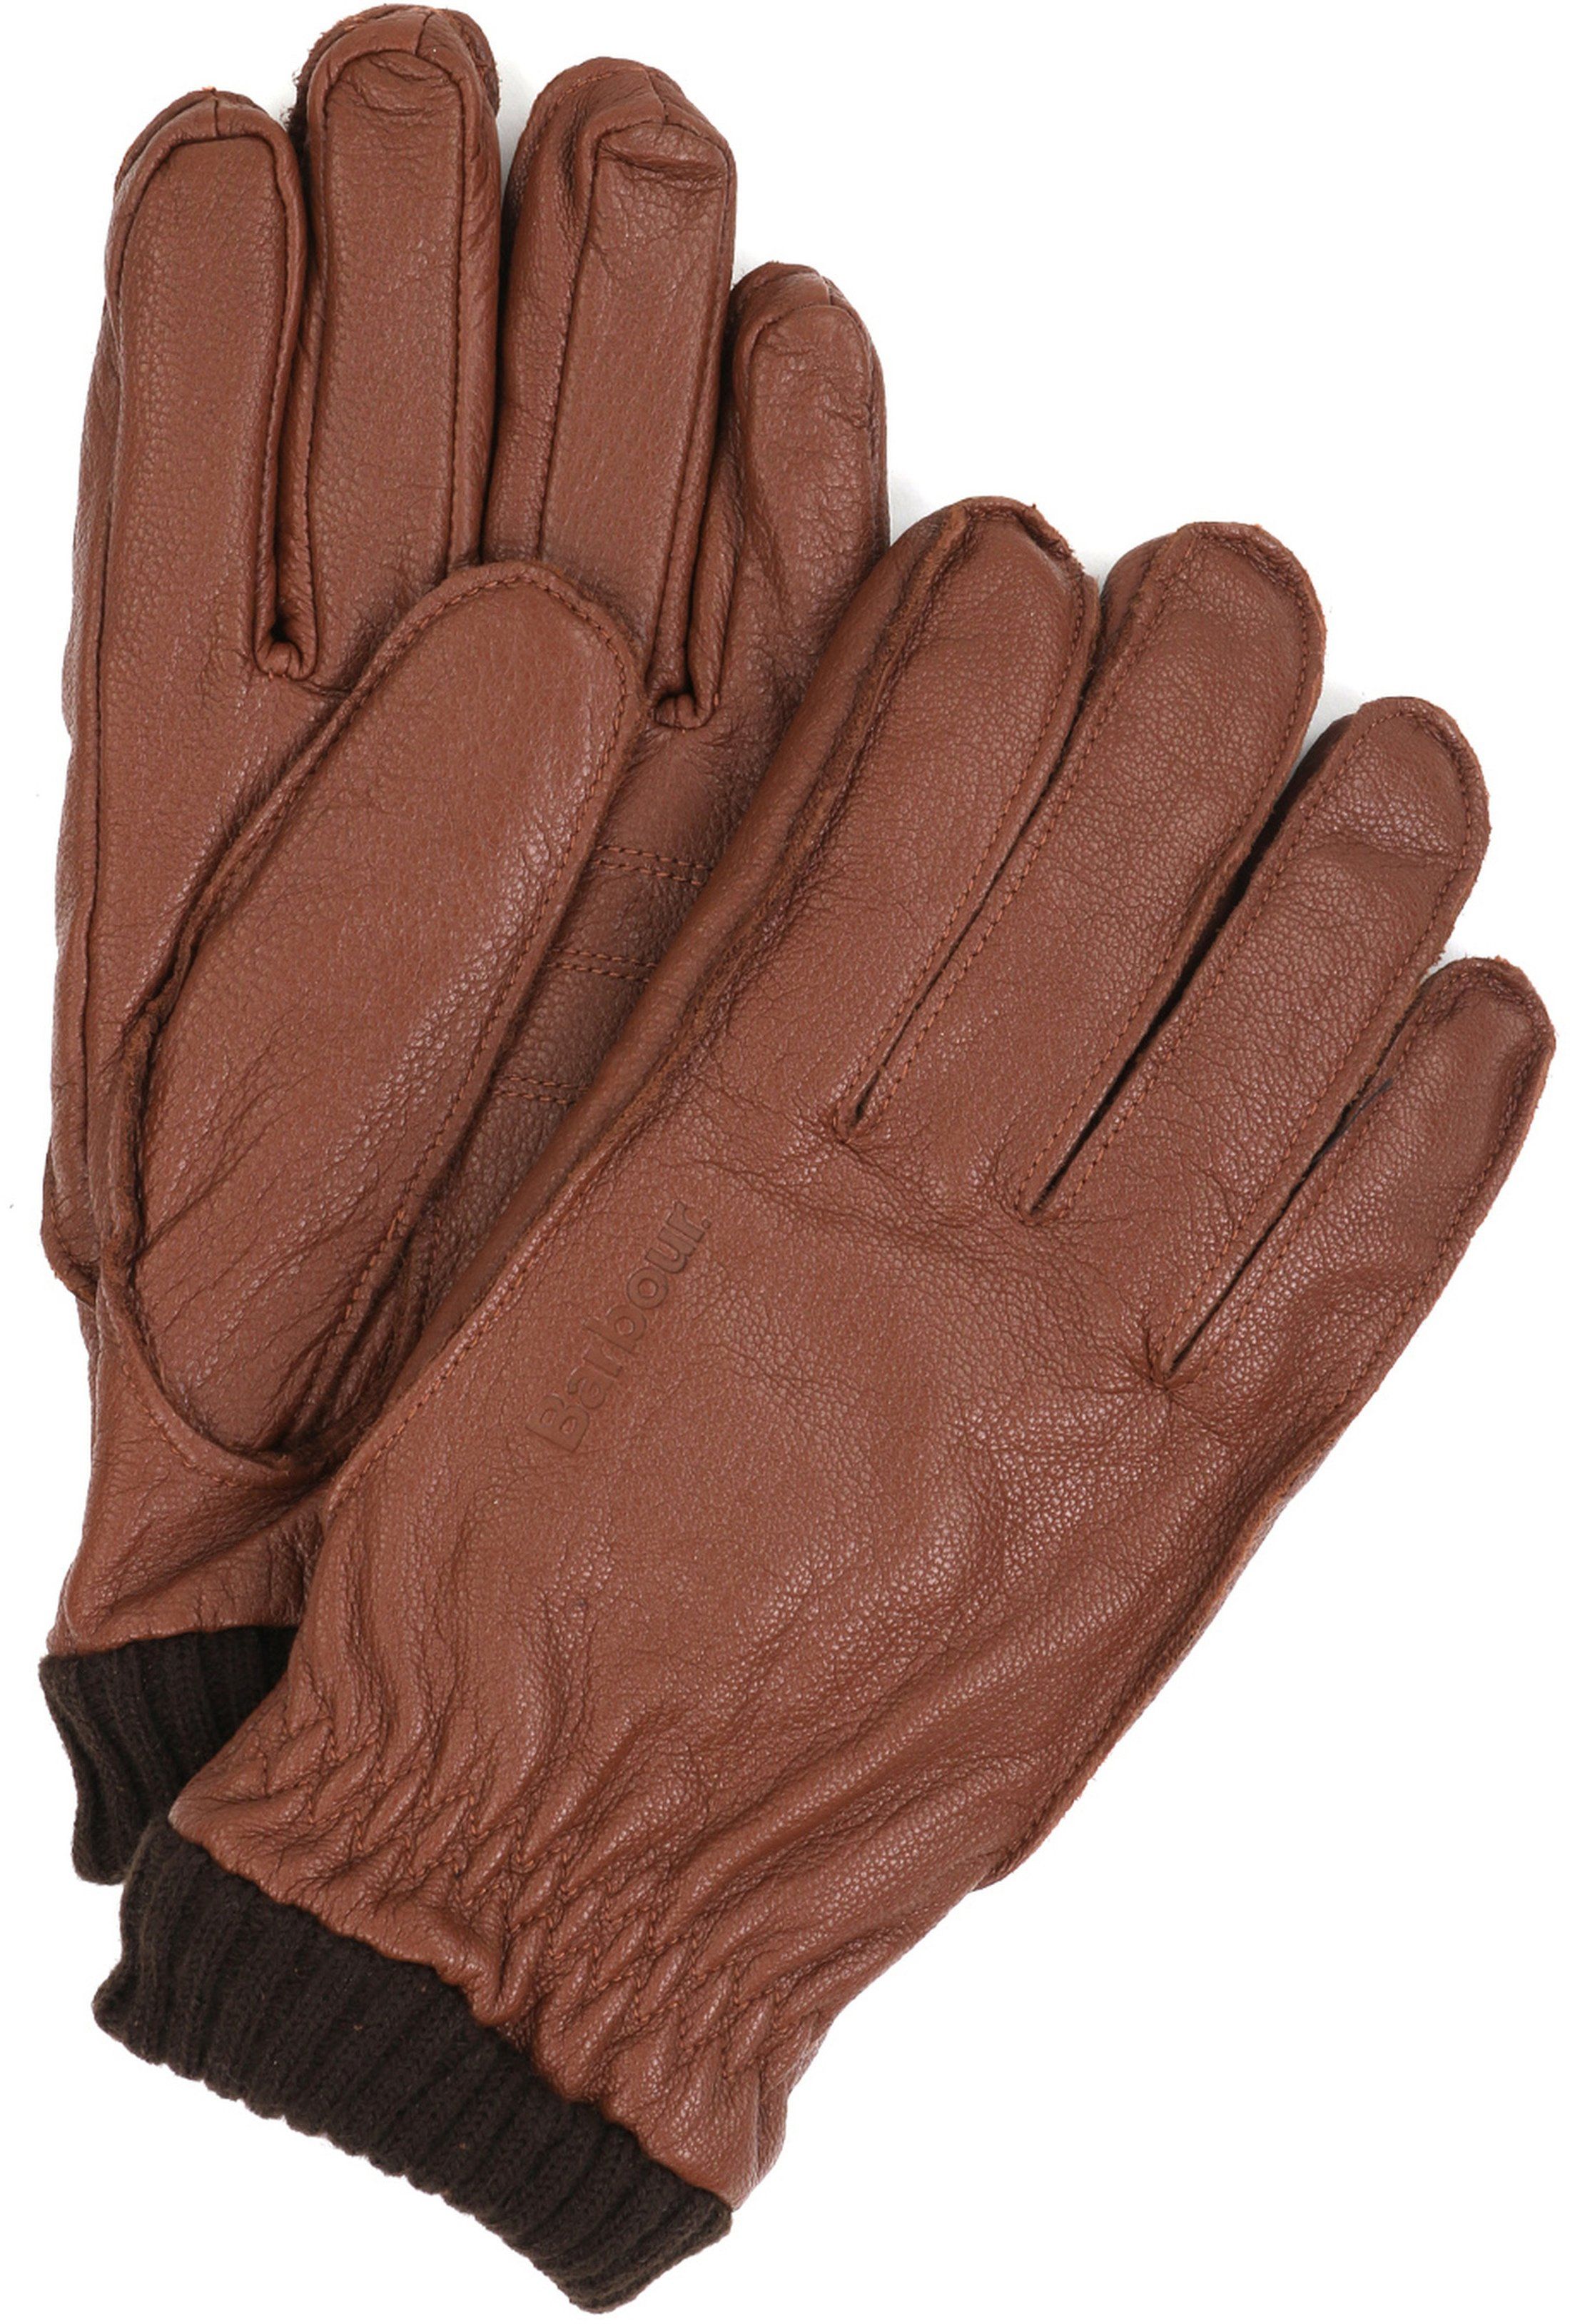 Barbour Gloves Camel Brown size M